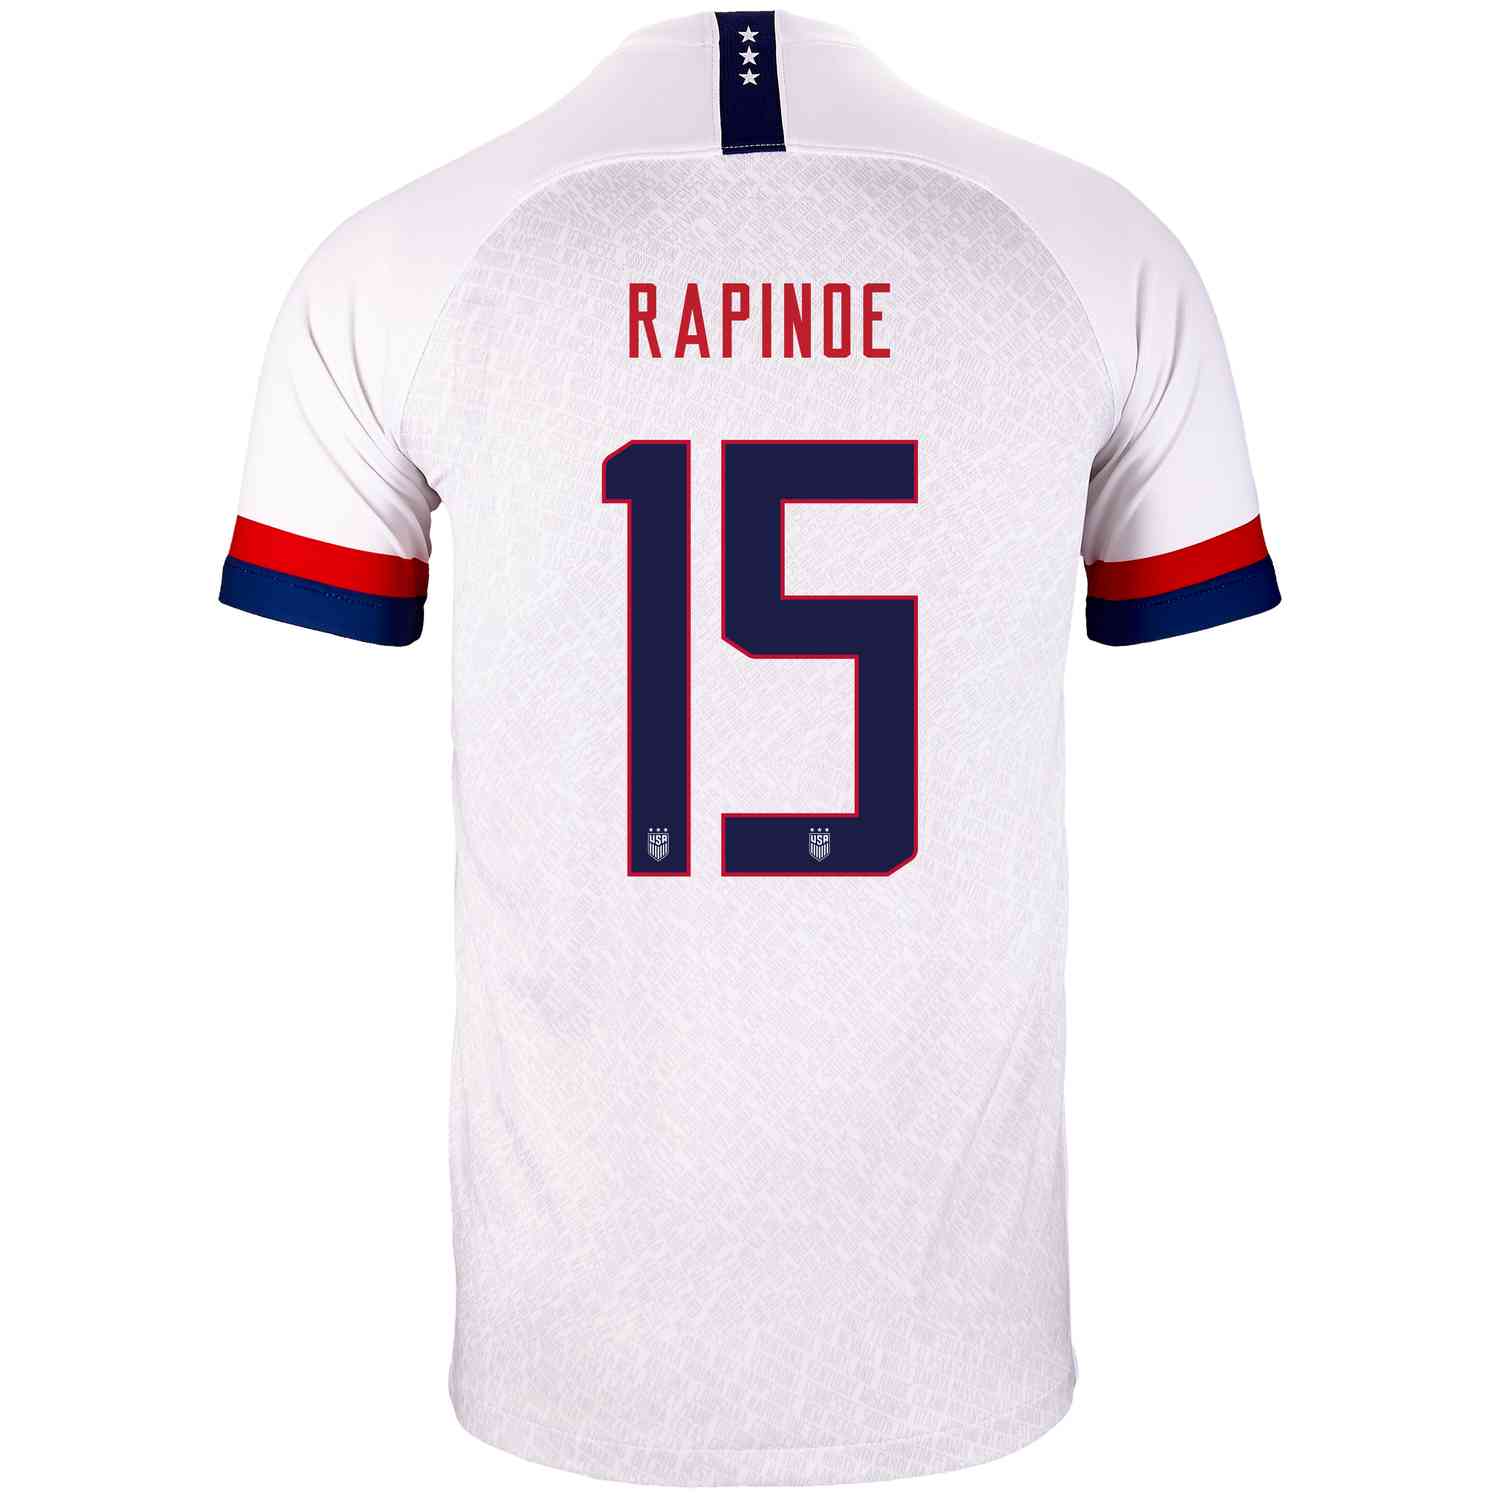 rapinoe youth jersey